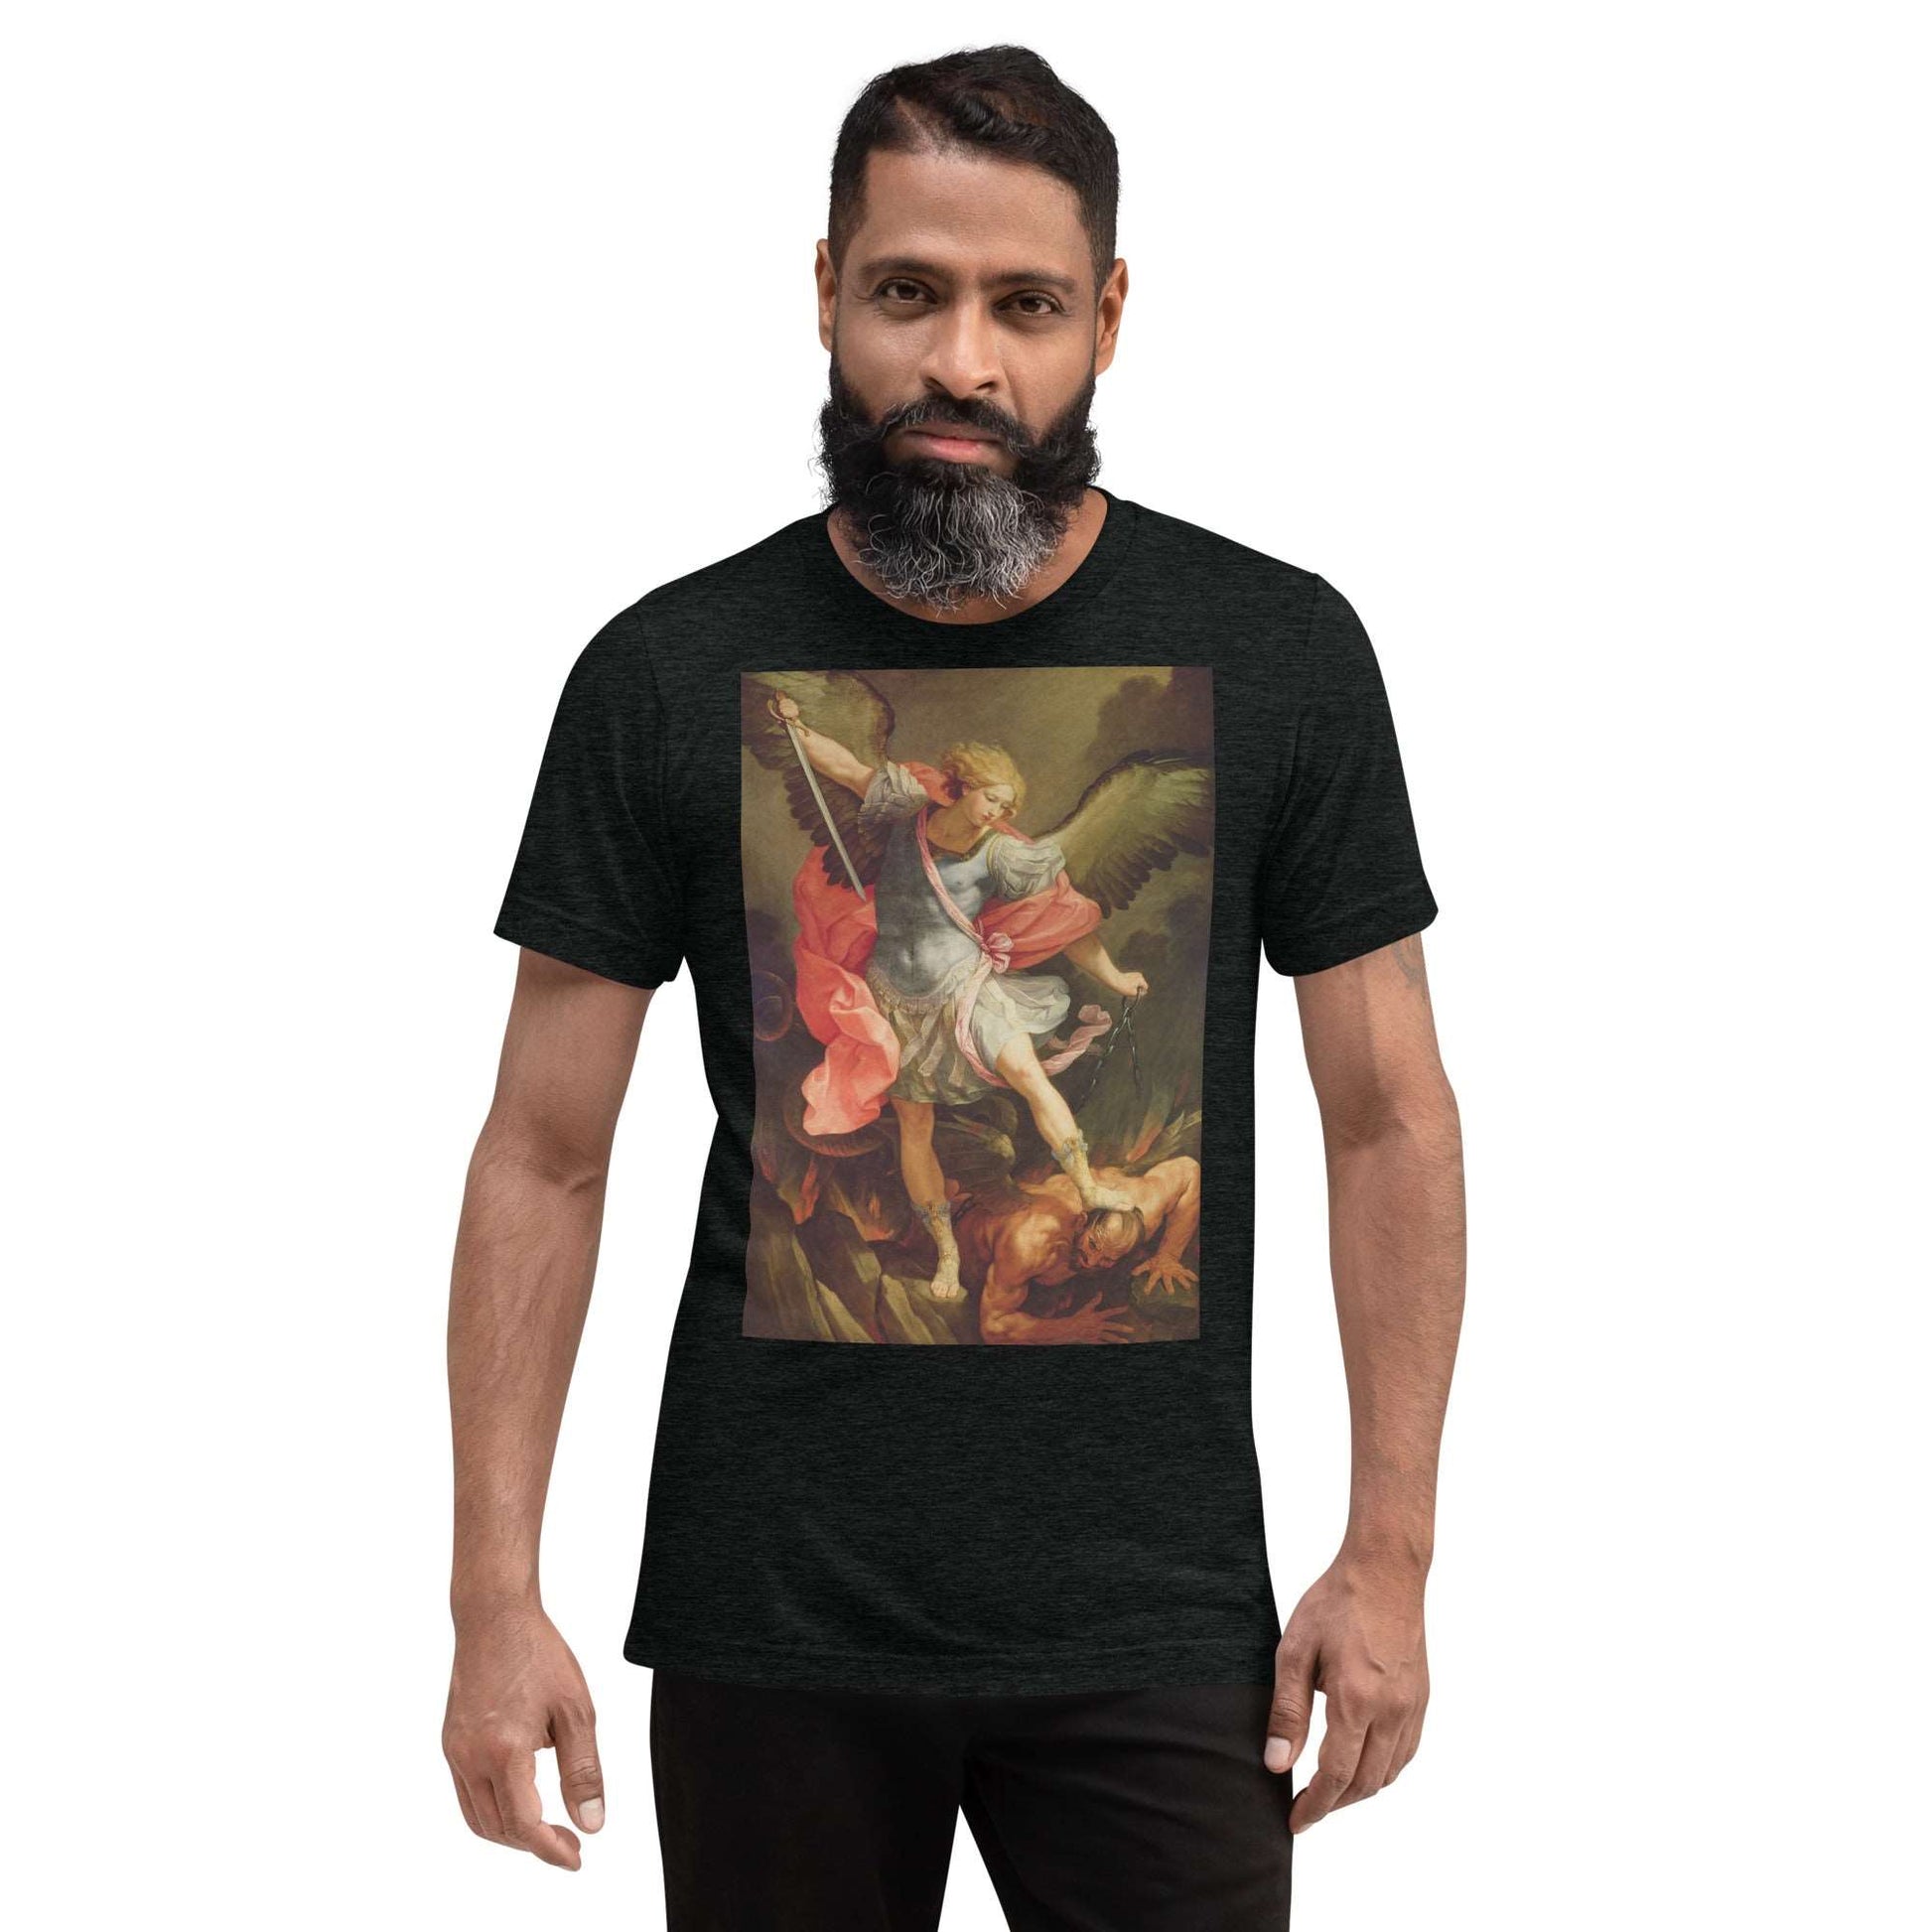 St. Michael Shirt